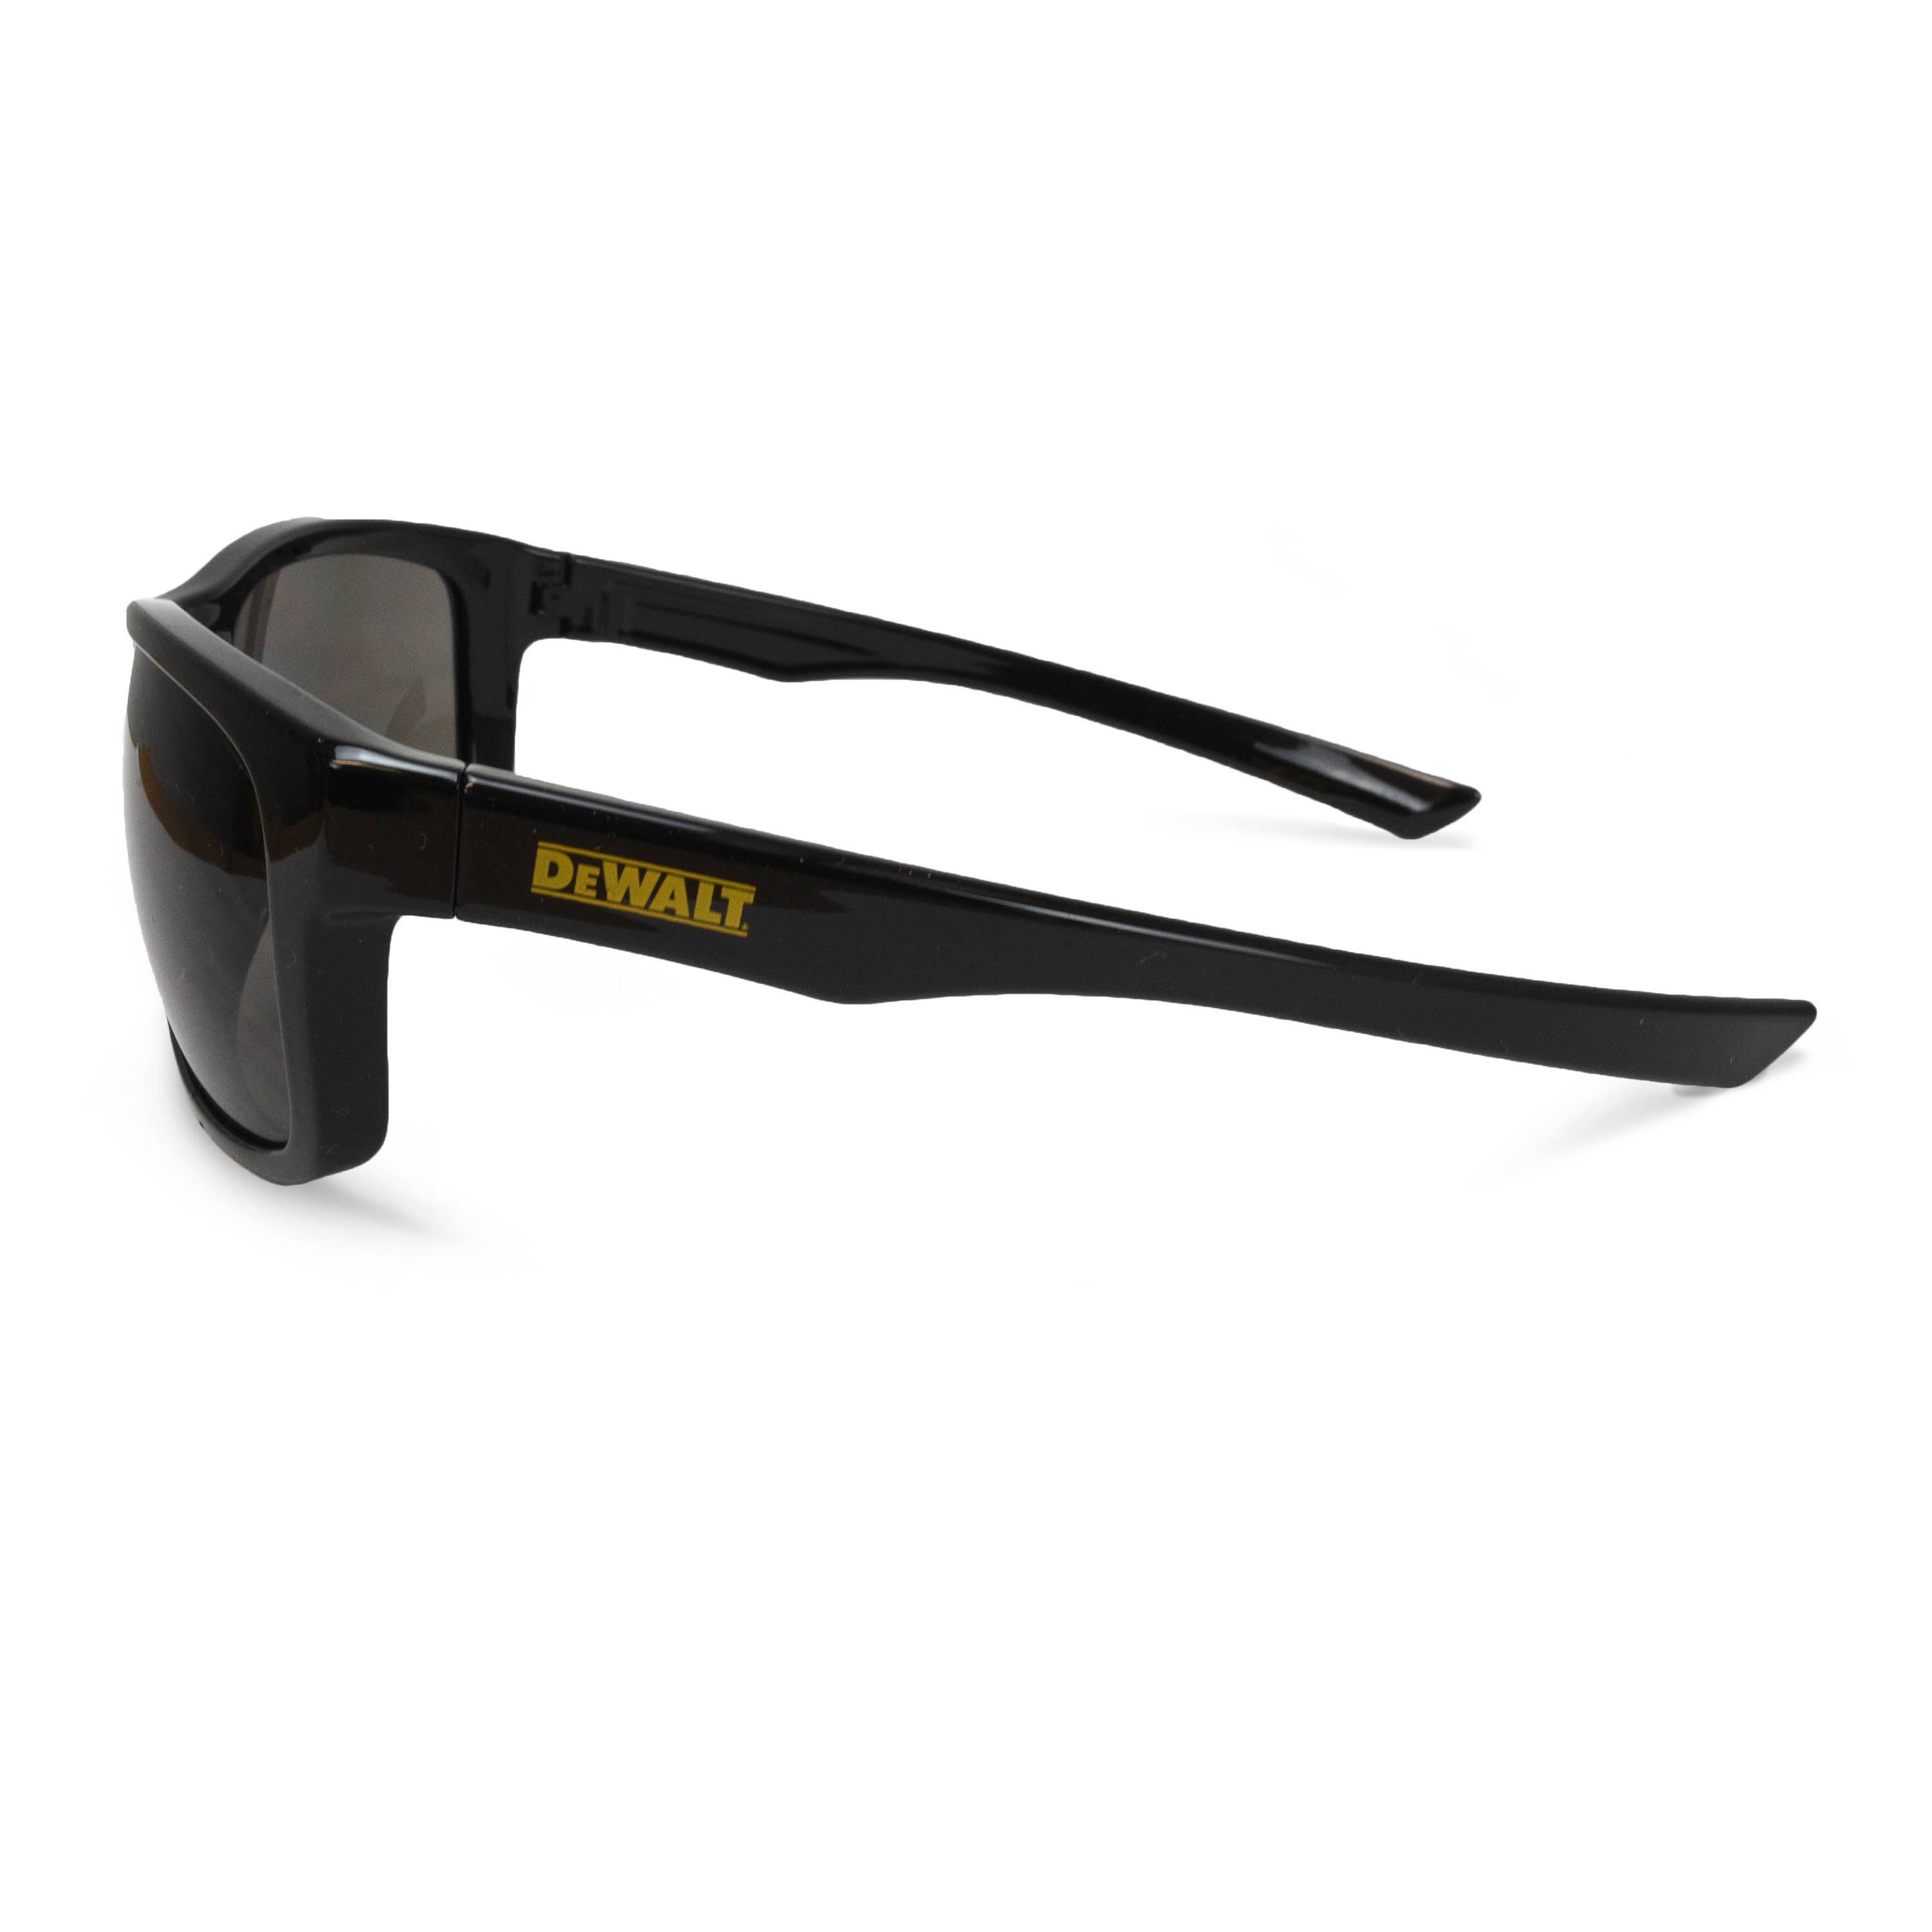 DeWALT Supervisor Premium Safety Glasses (Box of 12)